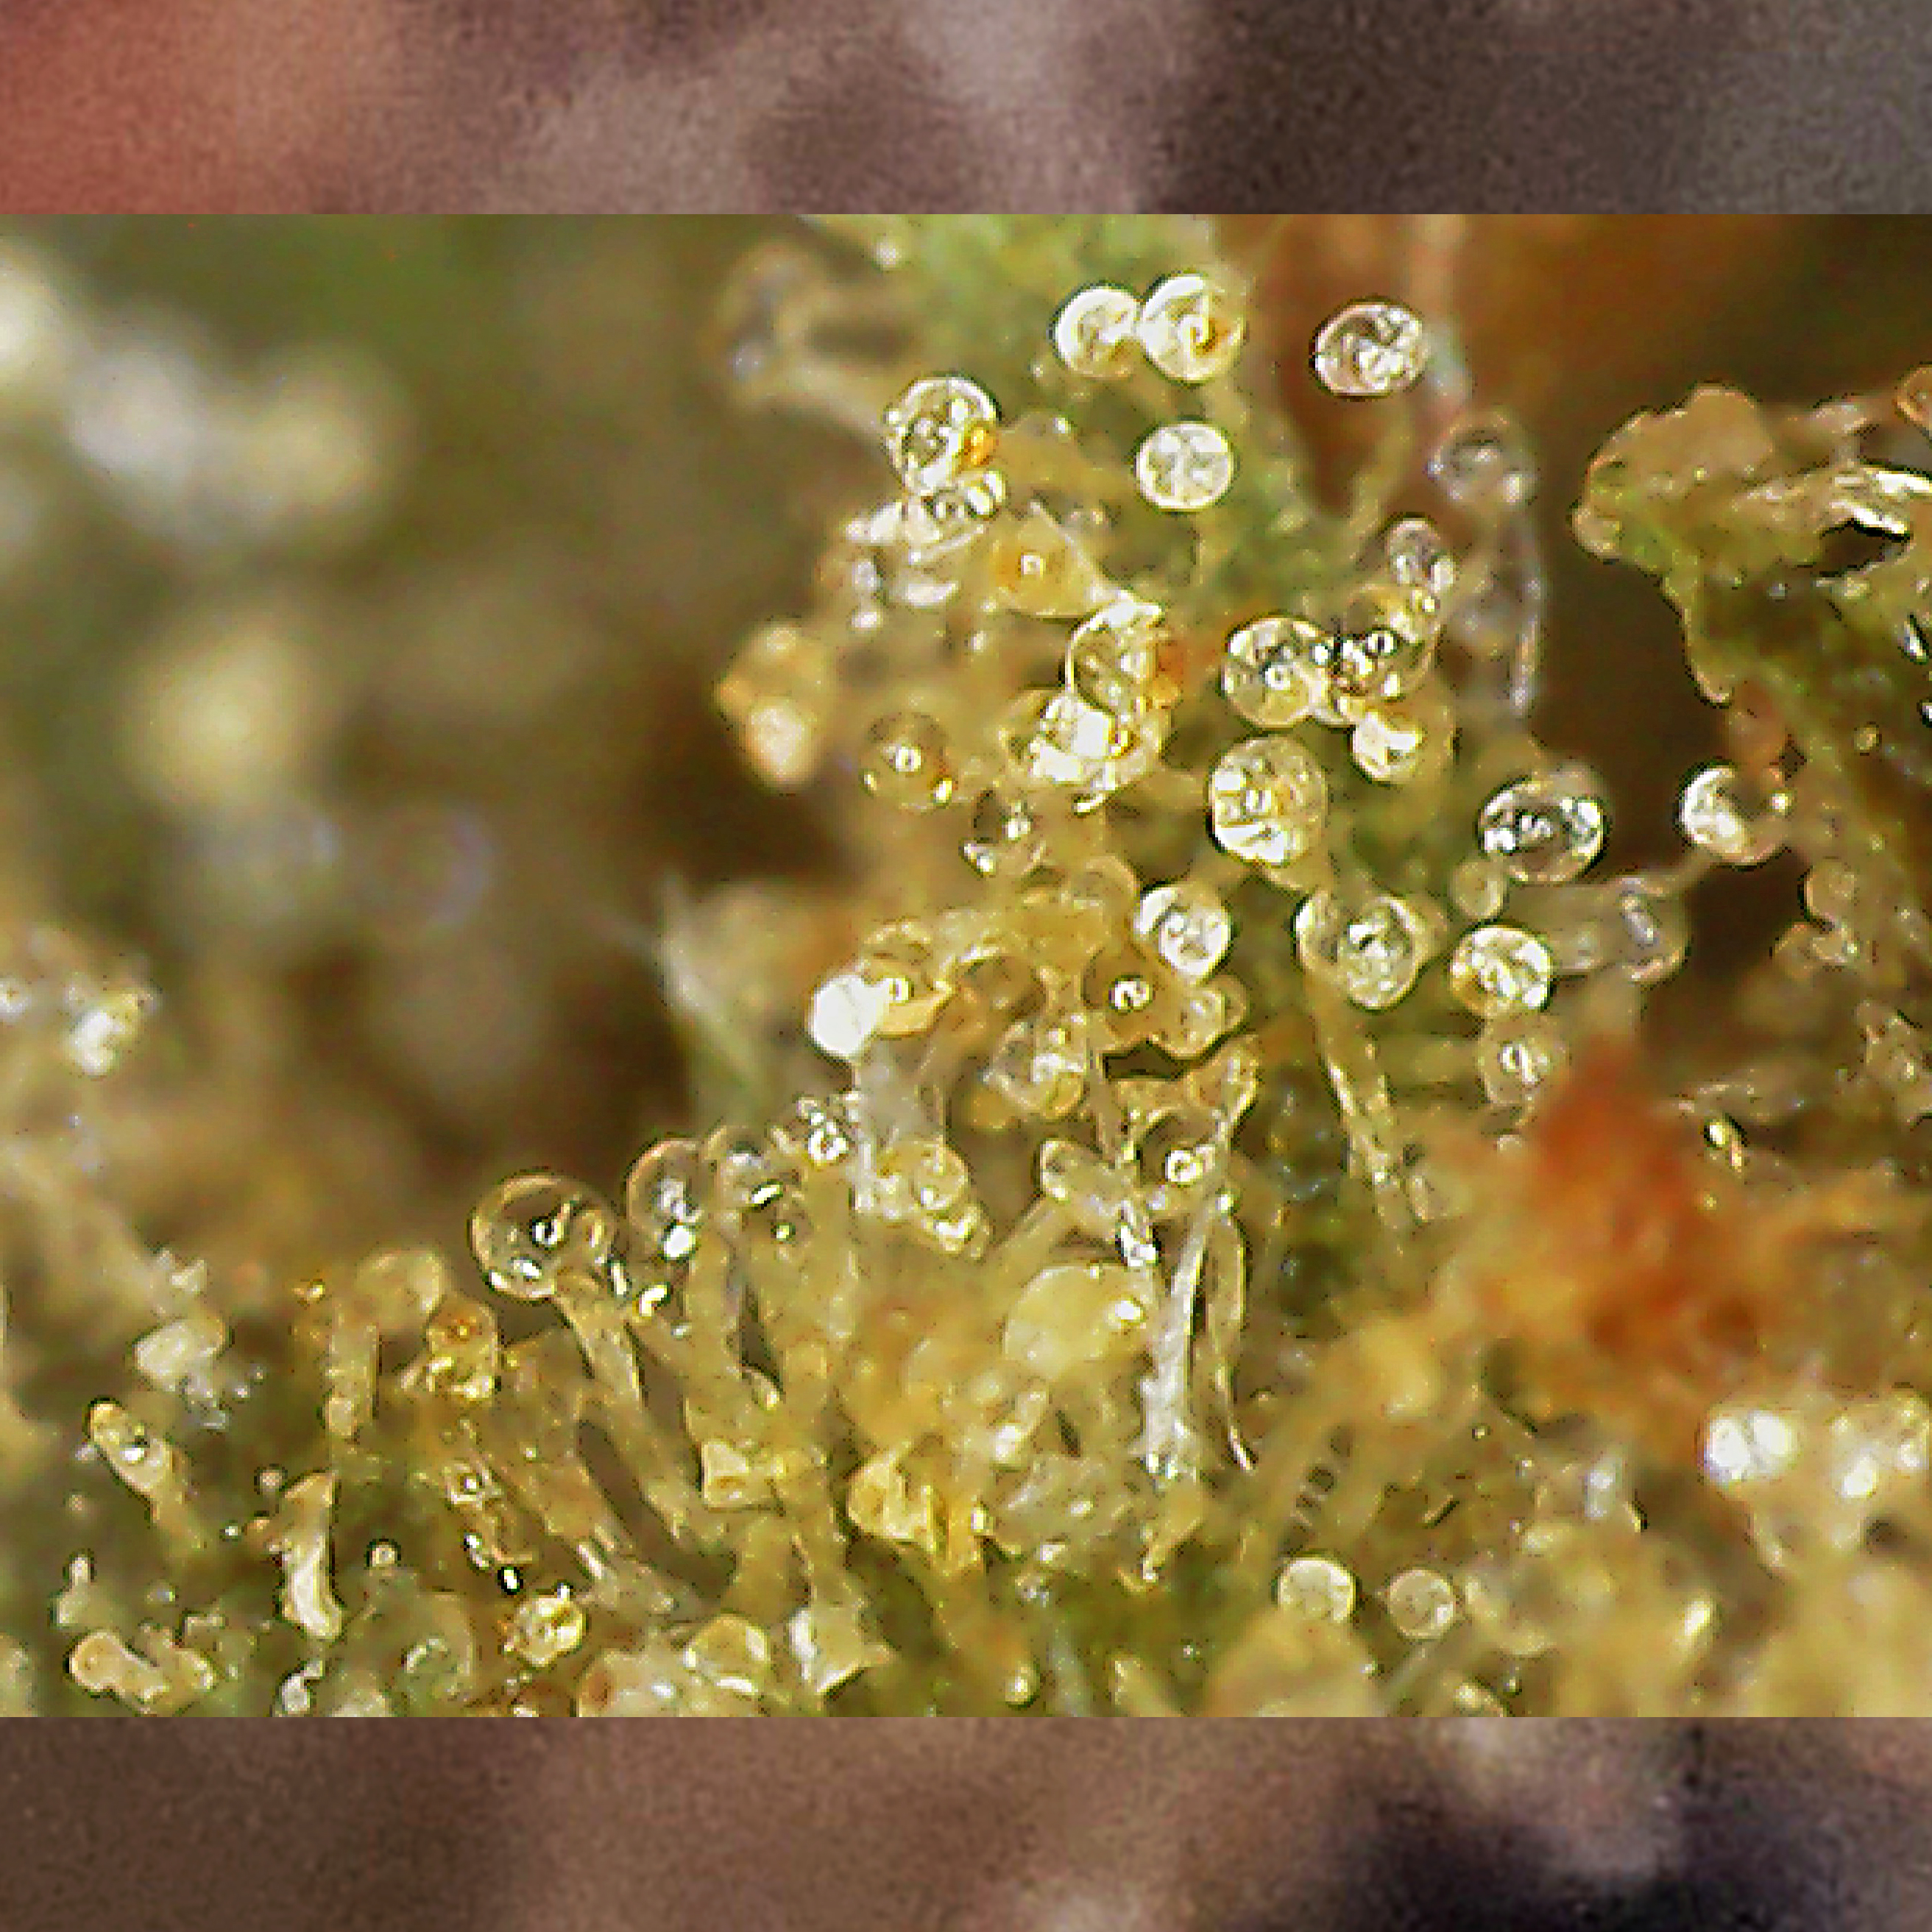 Reef Organic Canadian Cannabis Nova Scotia High Seas Ghost Train Haze Sativa Weed Strain - Stashmagazine.ca - Volume 1